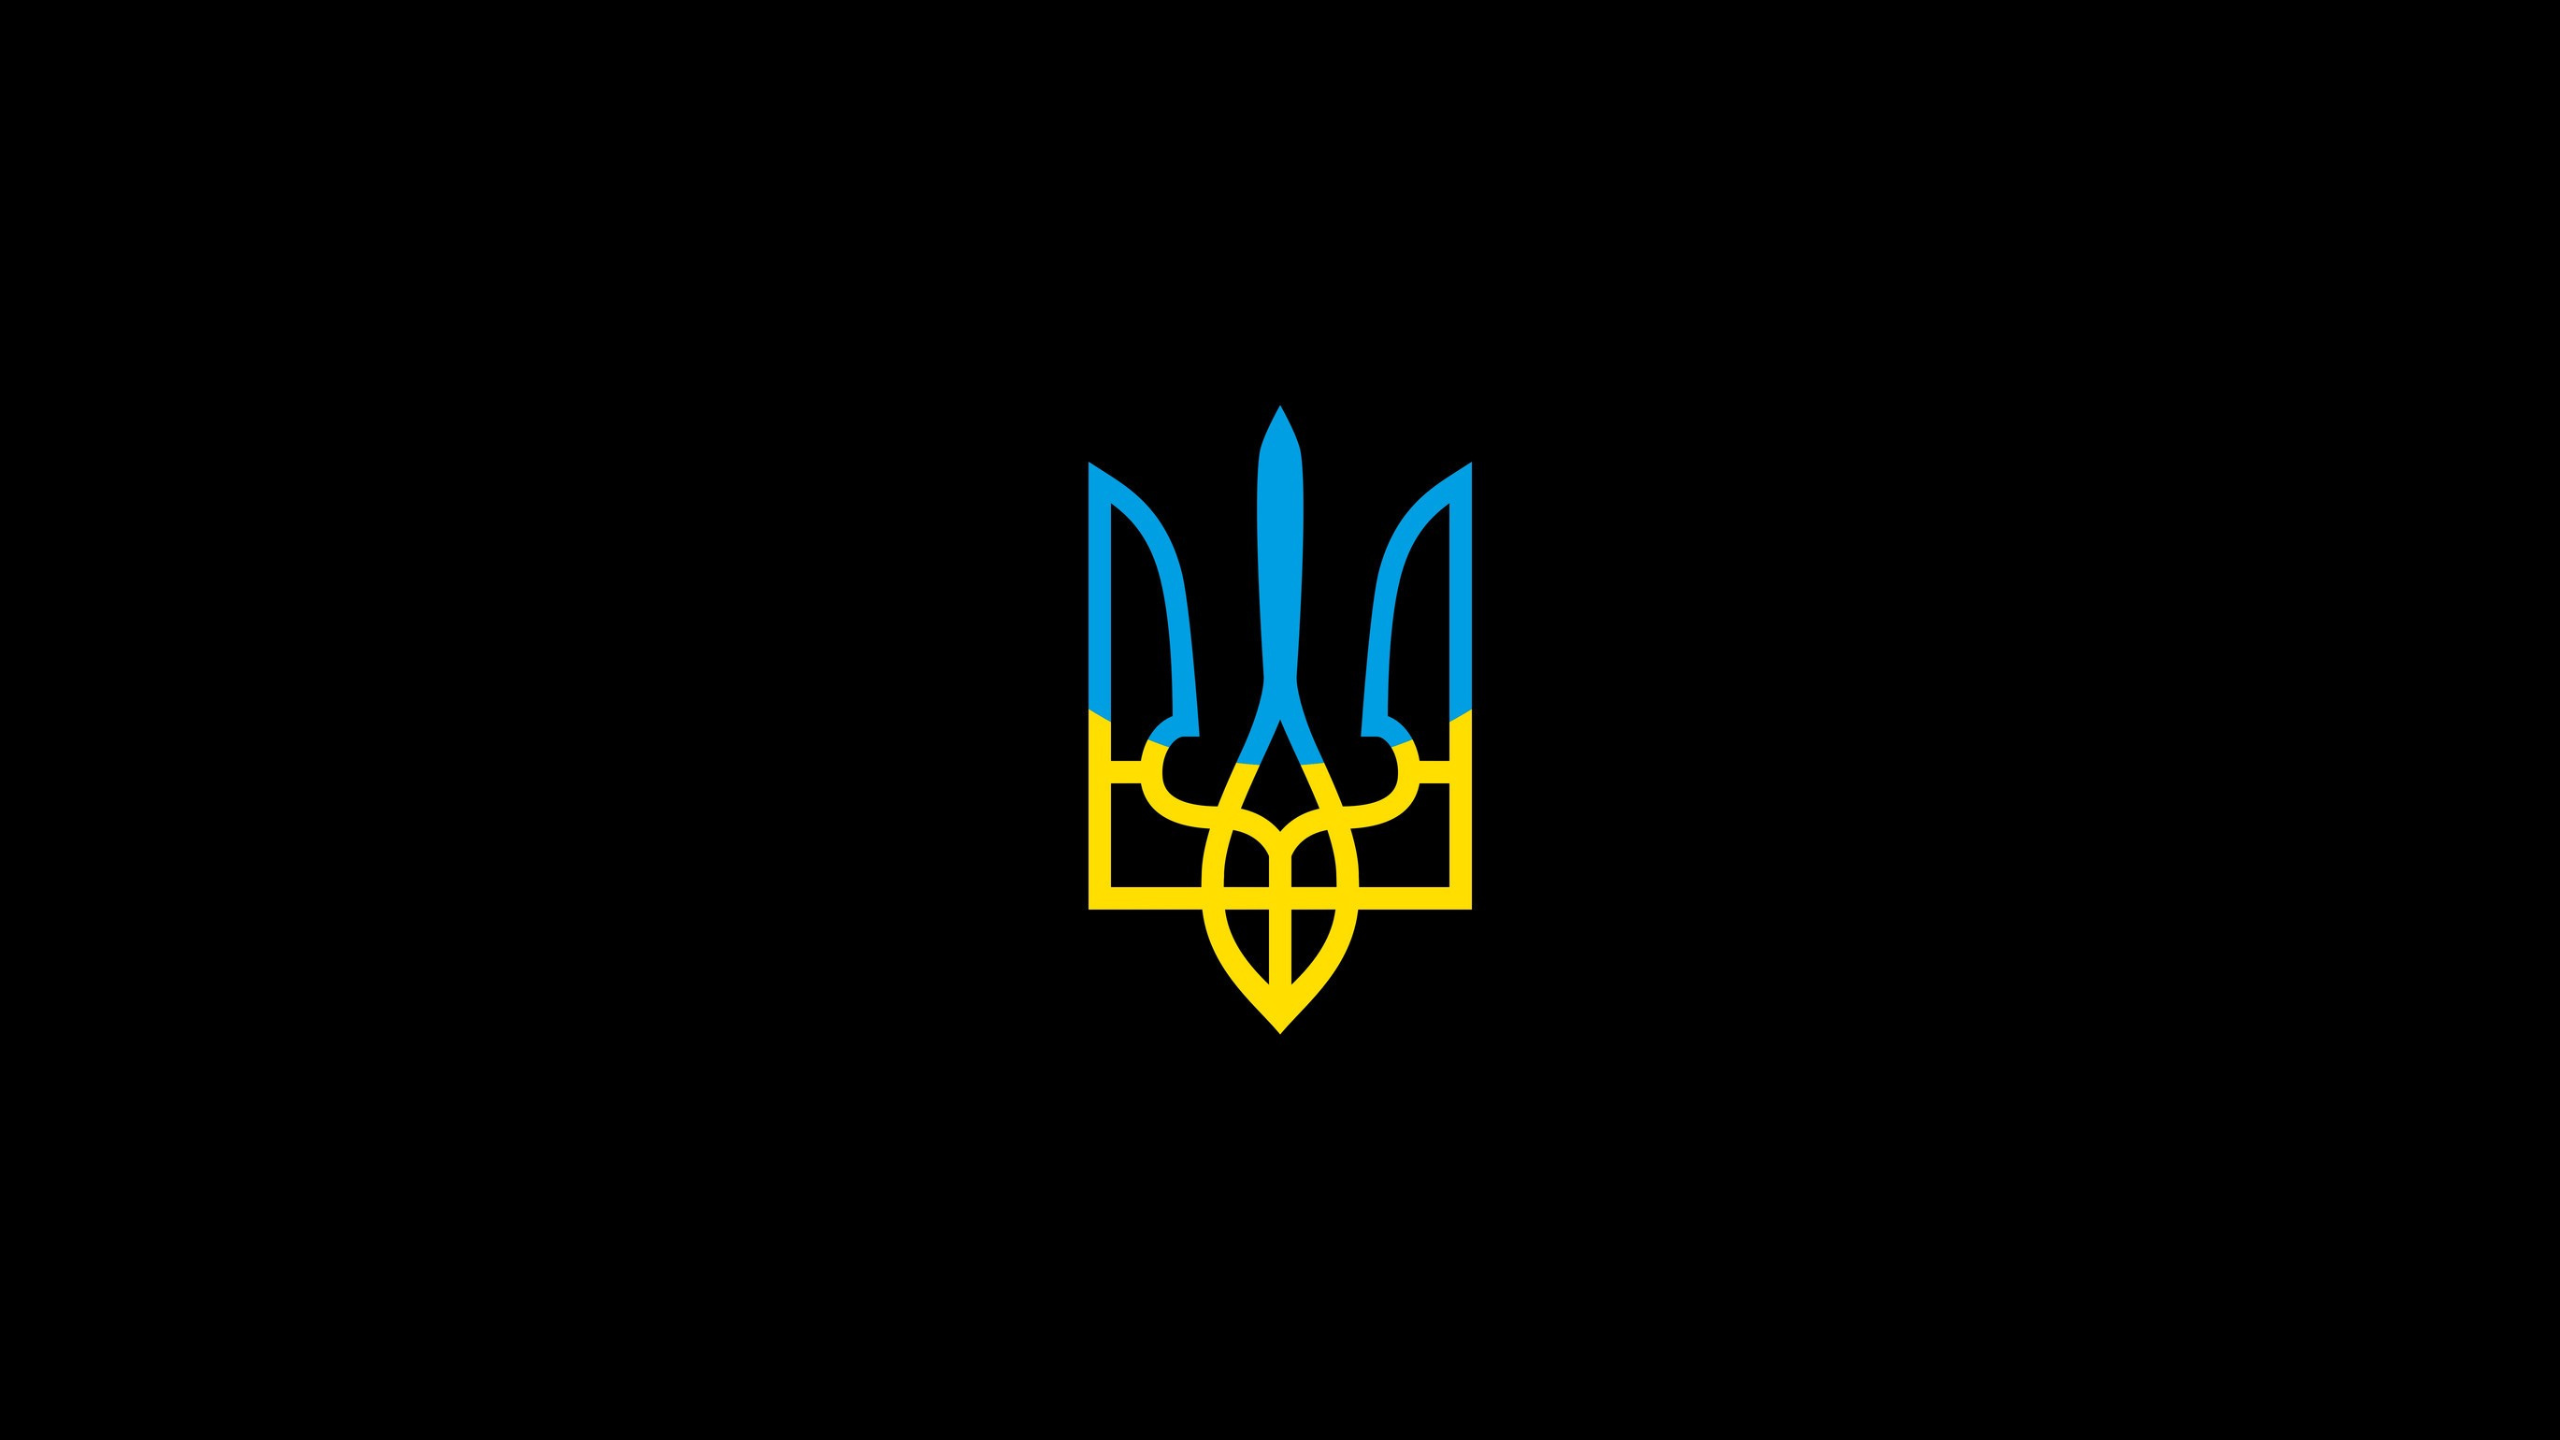 General 2560x1440 Ukraine coat of arms black background blue yellow simple background digital art minimalism